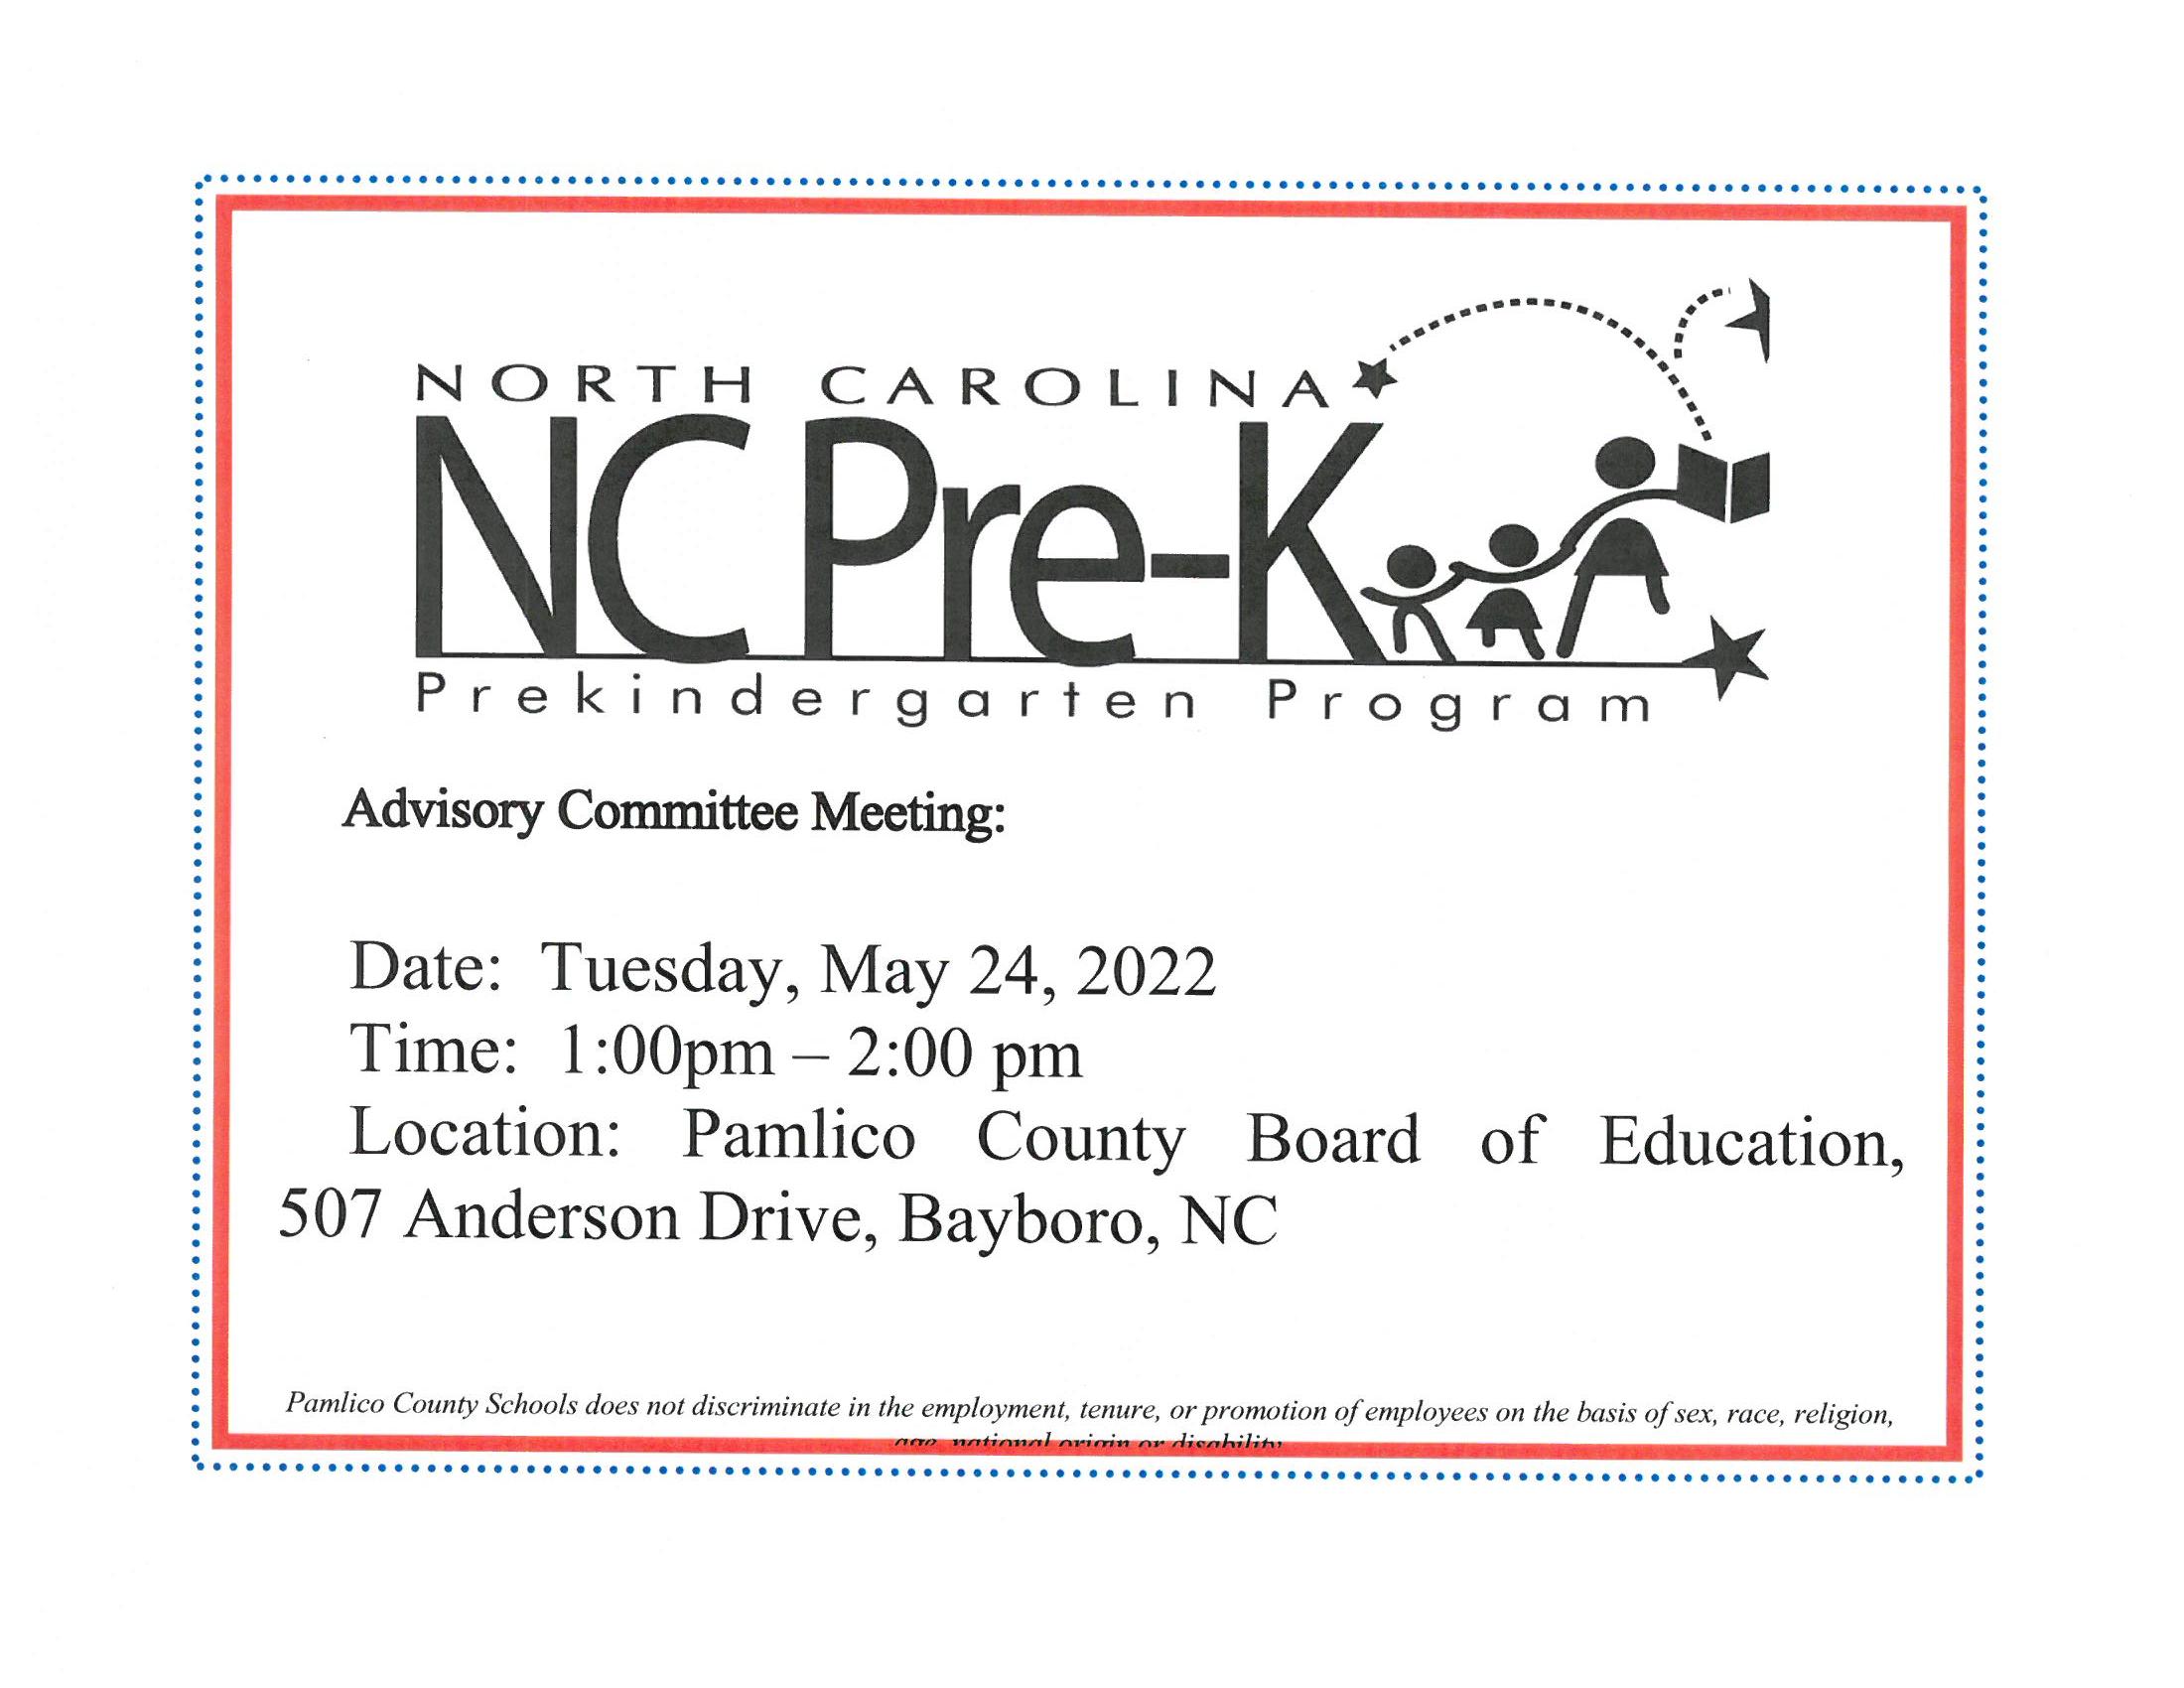 NC Pre-K Meeting Details